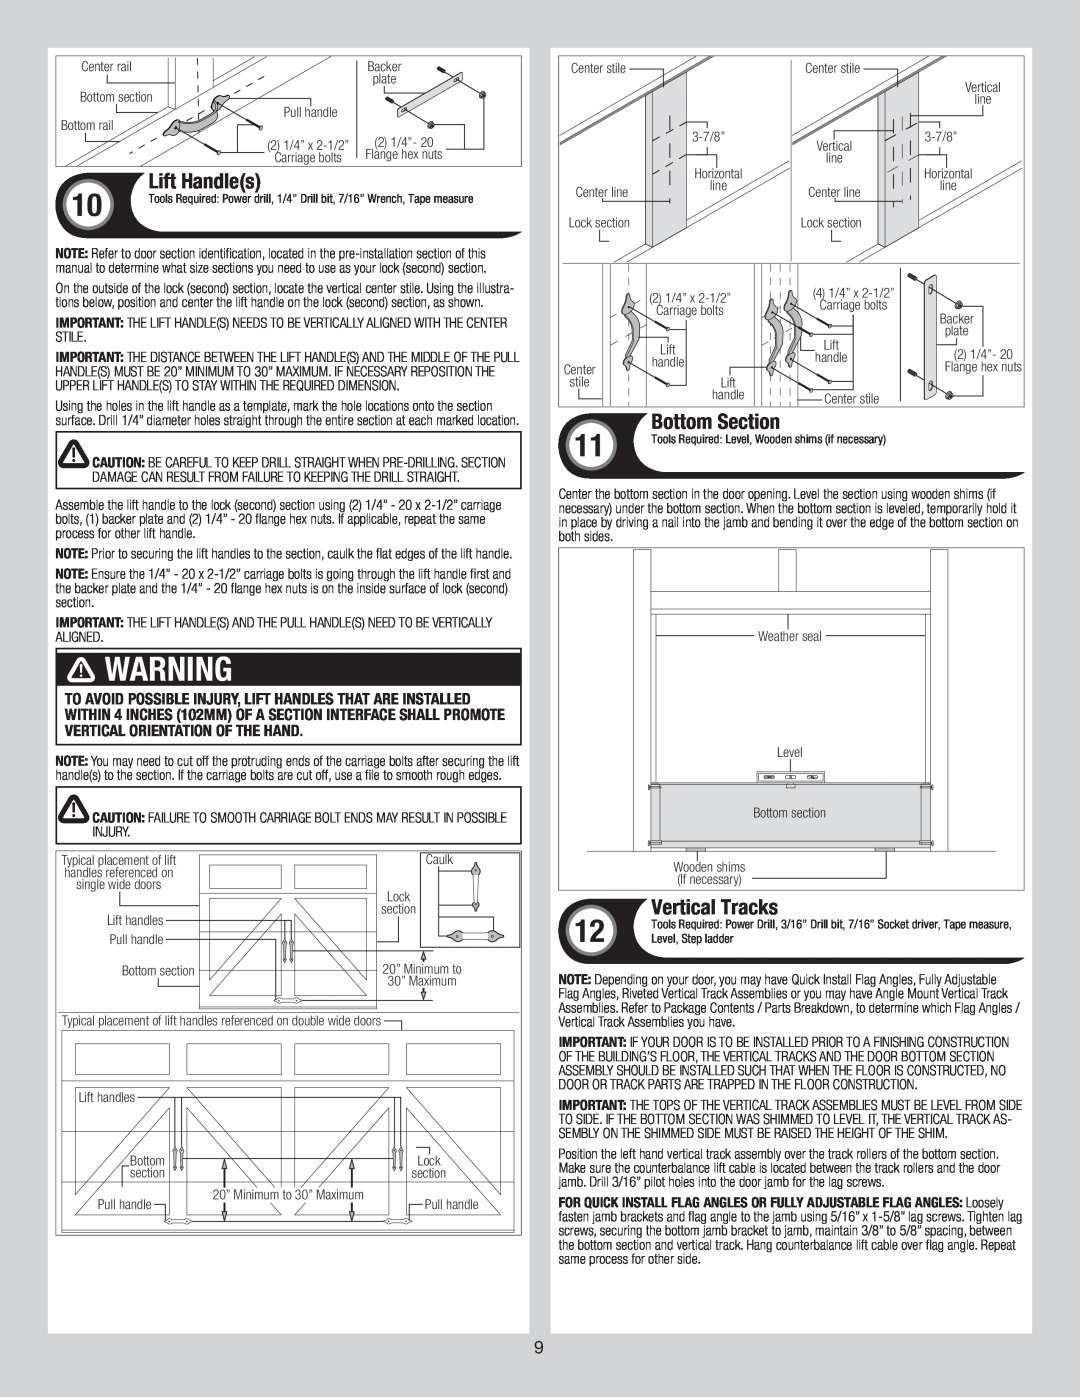 Wayne-Dalton 6600 installation instructions Lift Handles, Bottom Section, Vertical Tracks, WarningARNING 